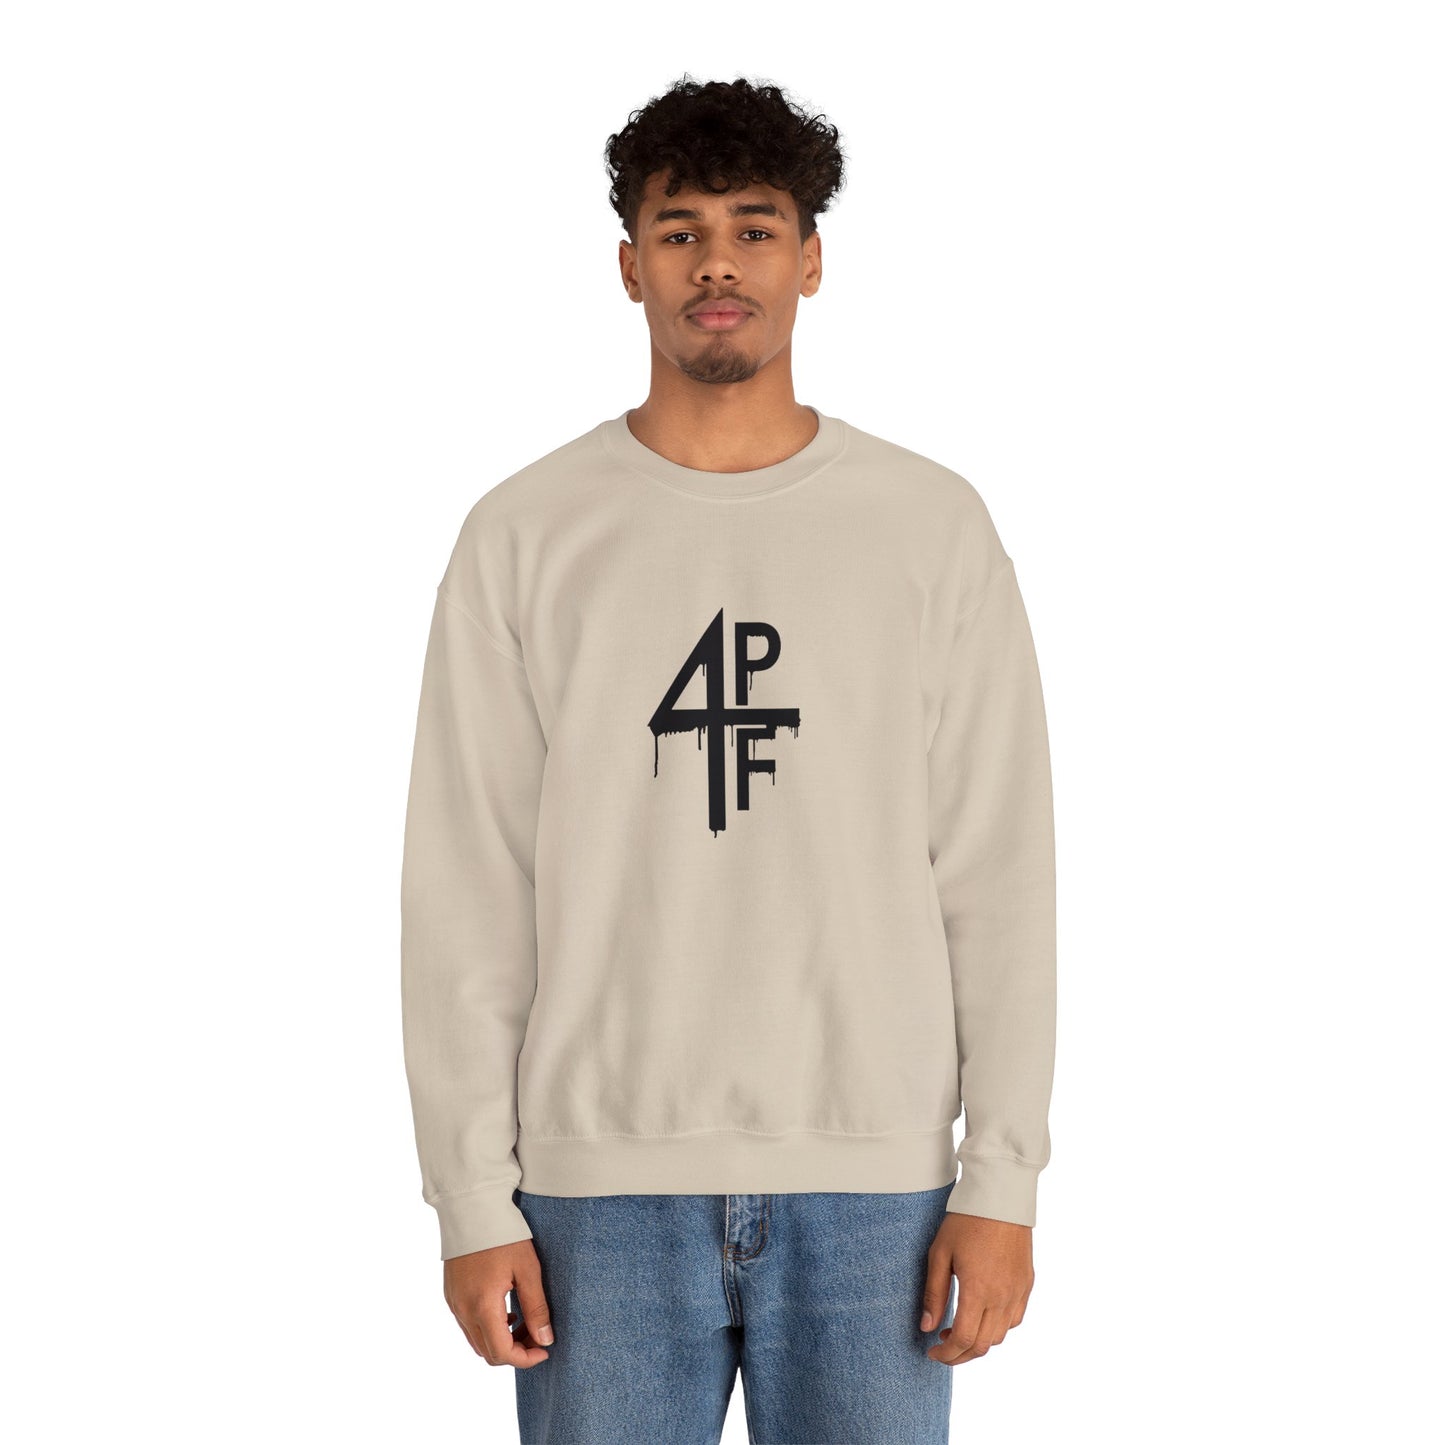 4PF Sweatshirt